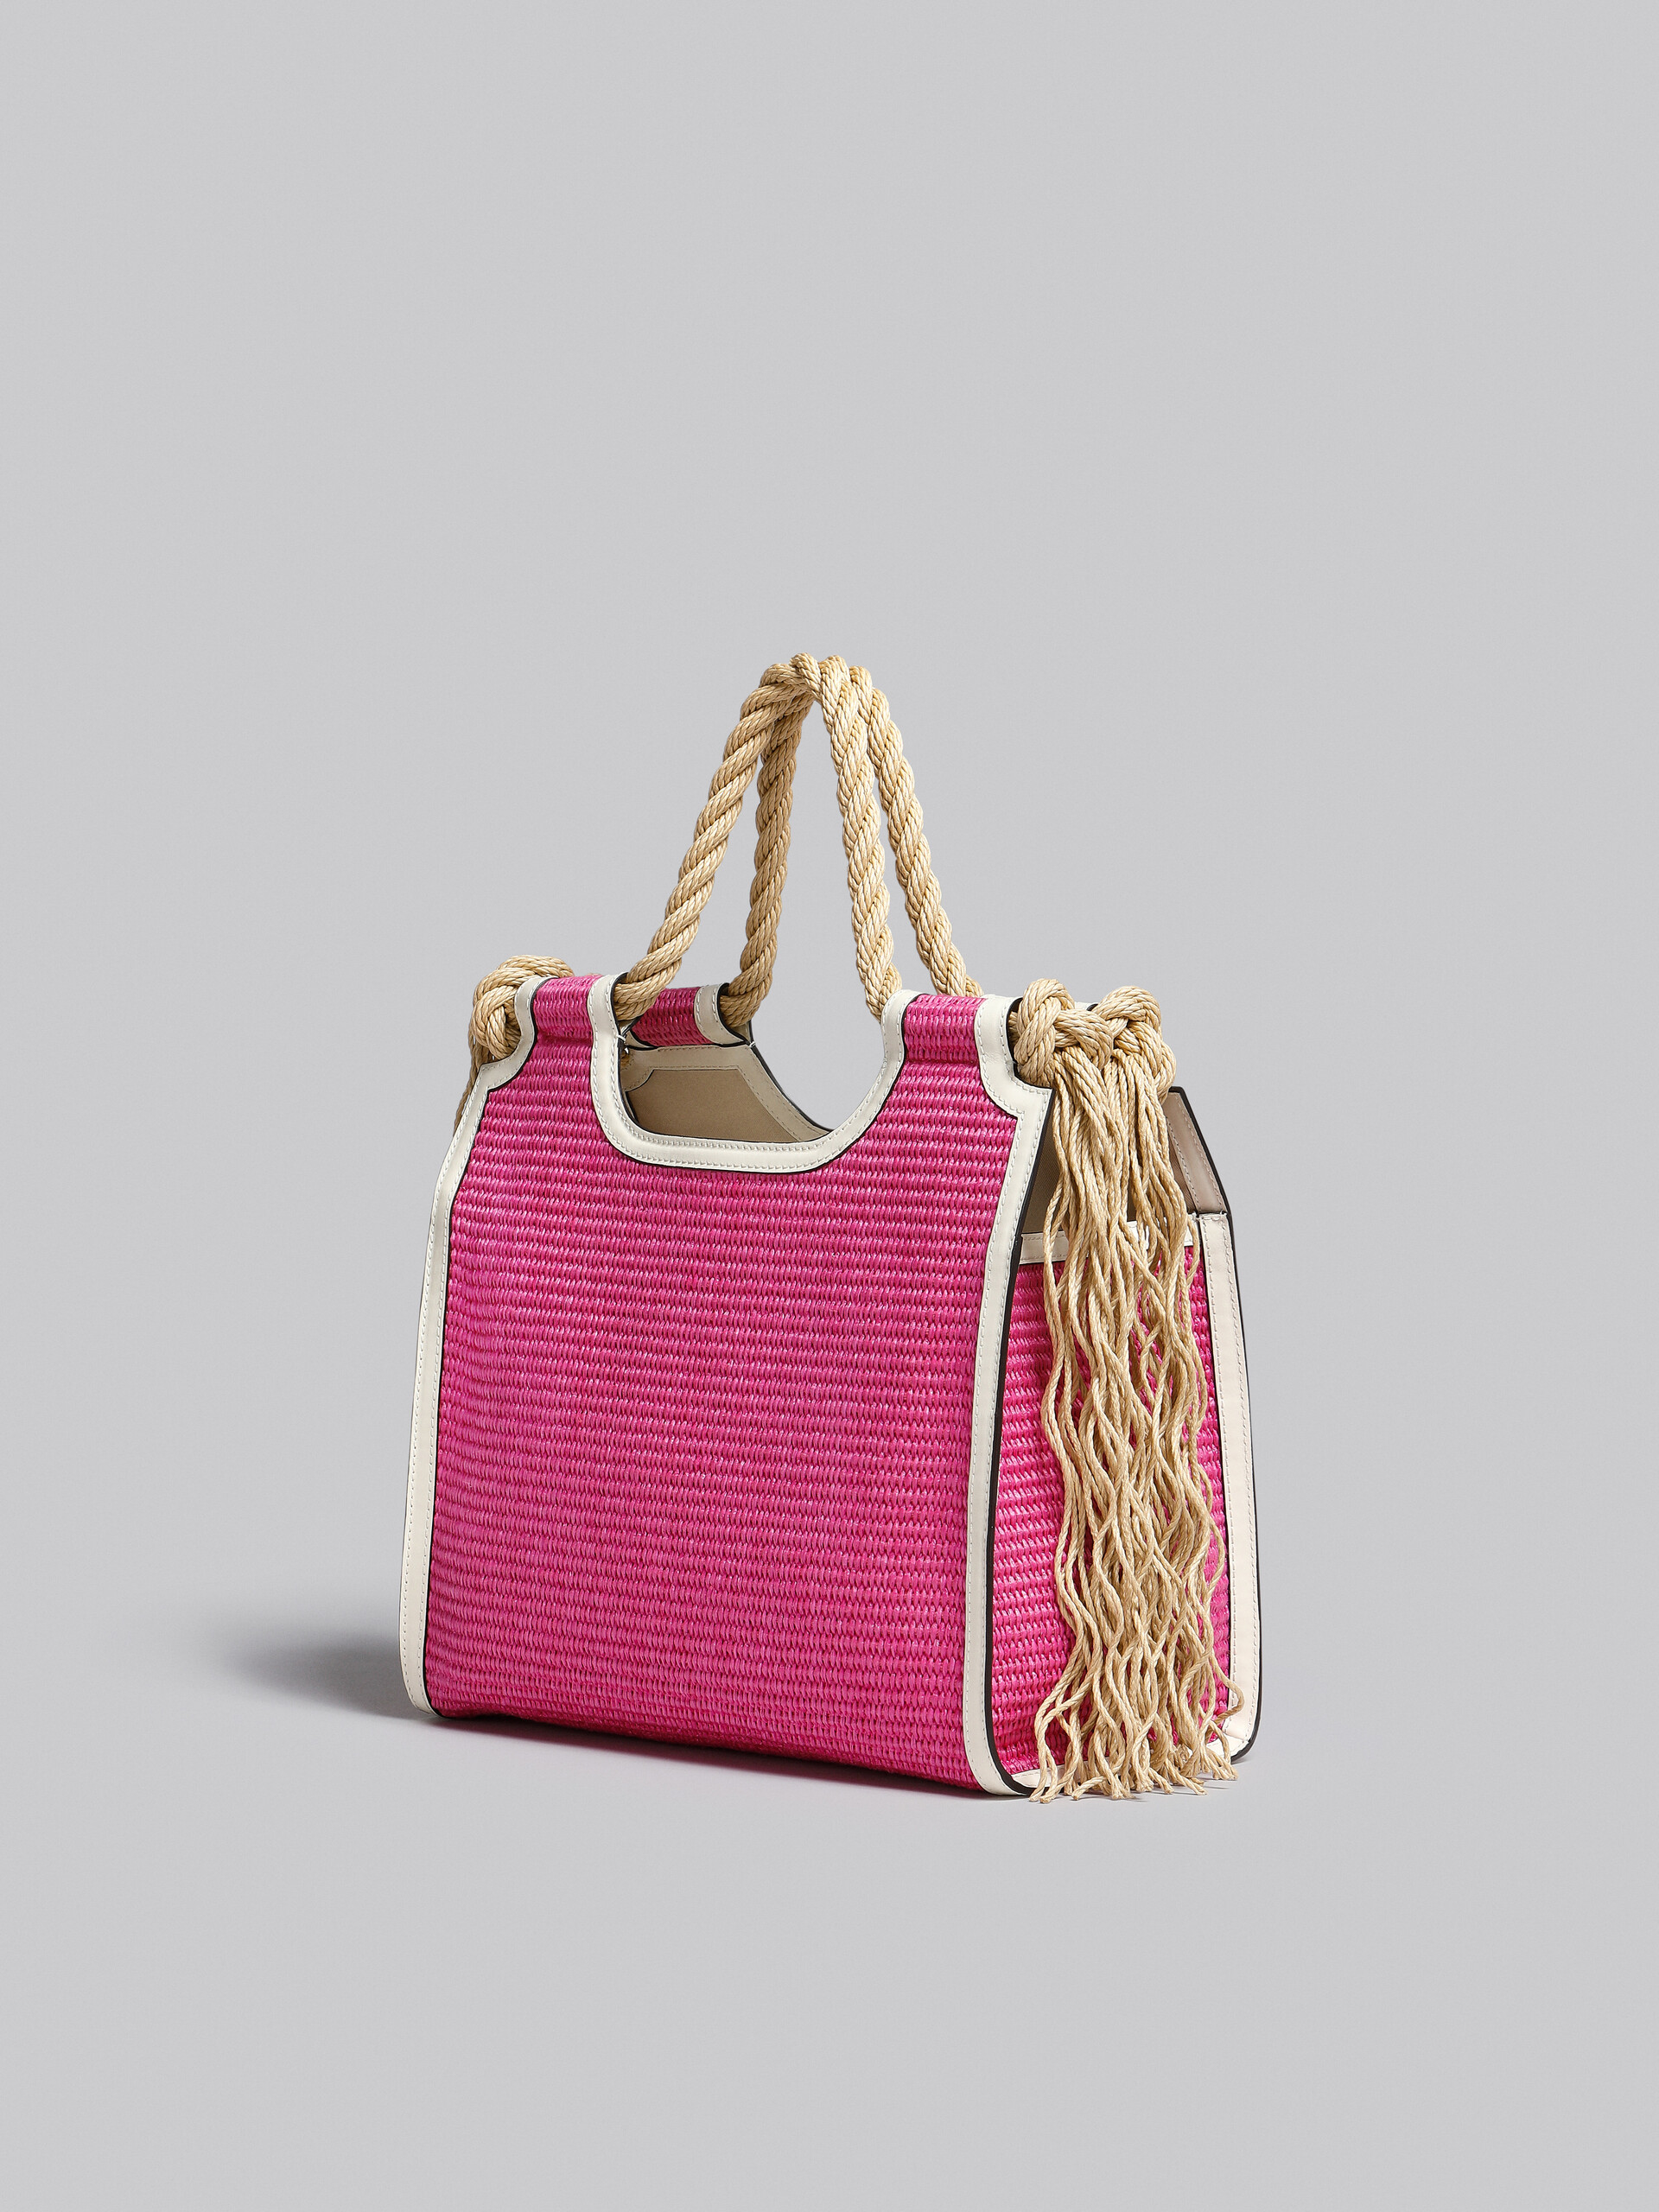 Marni x No Vacancy Inn - Marcel Tote Bag in pink raffia with white trims - Handbag - Image 3